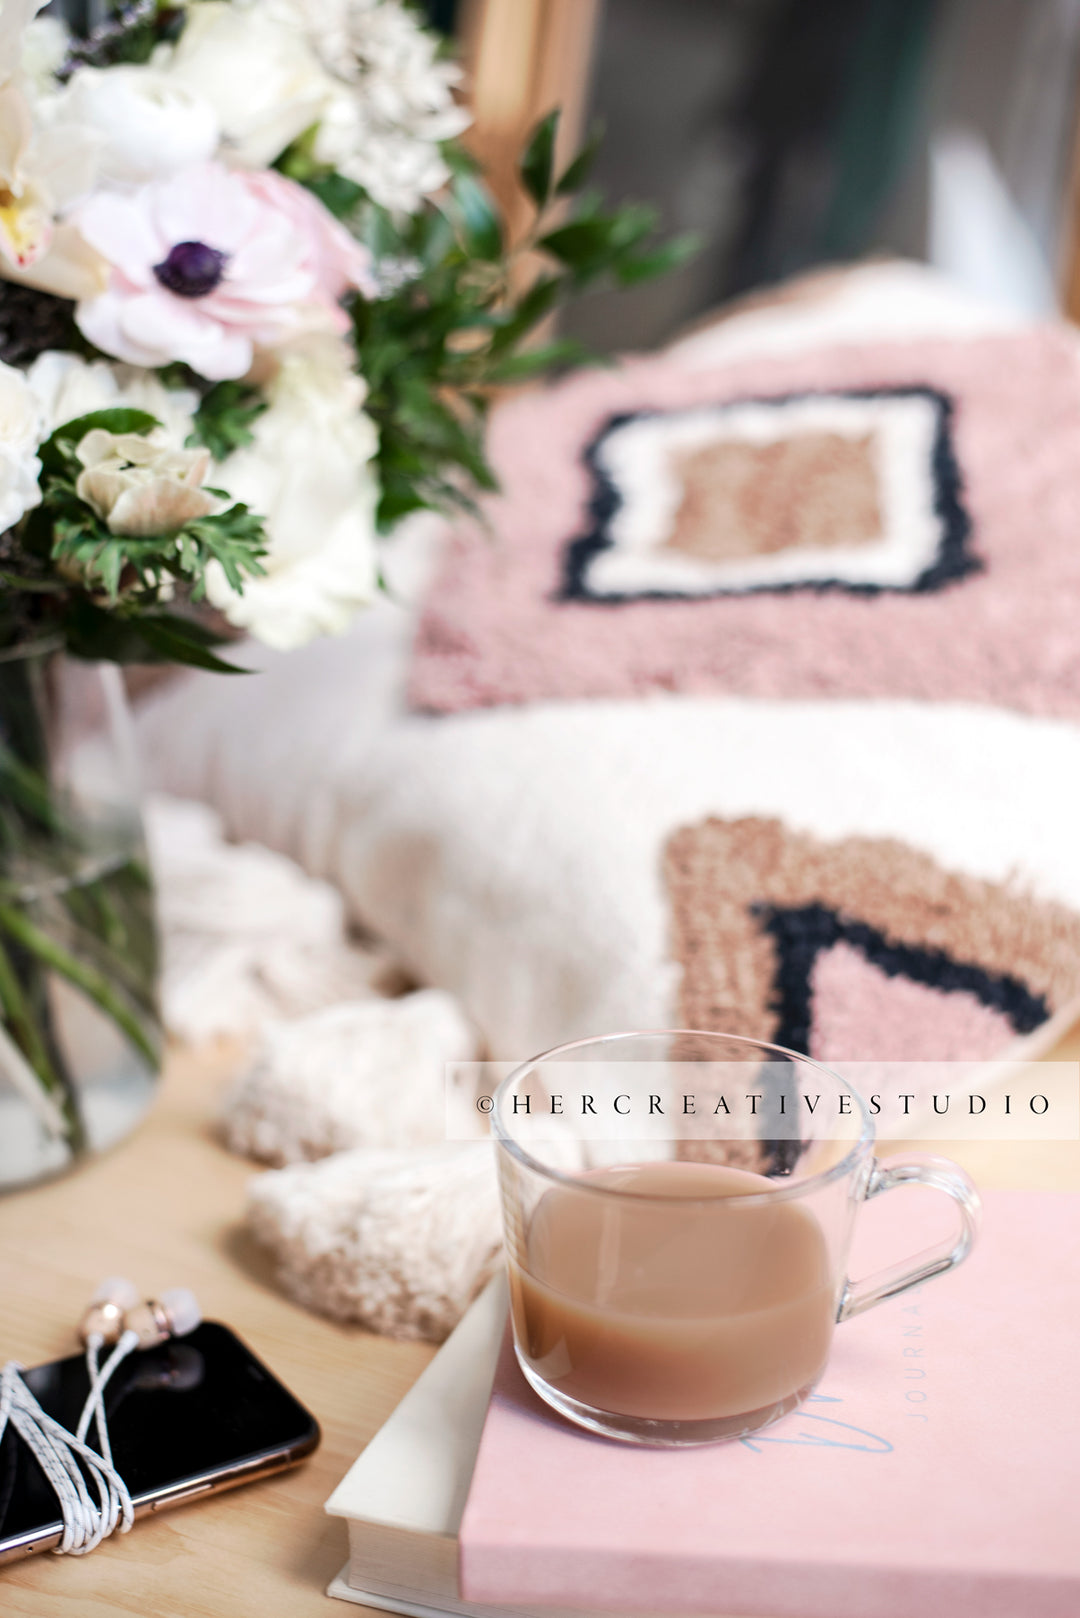 Coffee, Cushion & Flowers on Wood Floor, Styled Stock Image